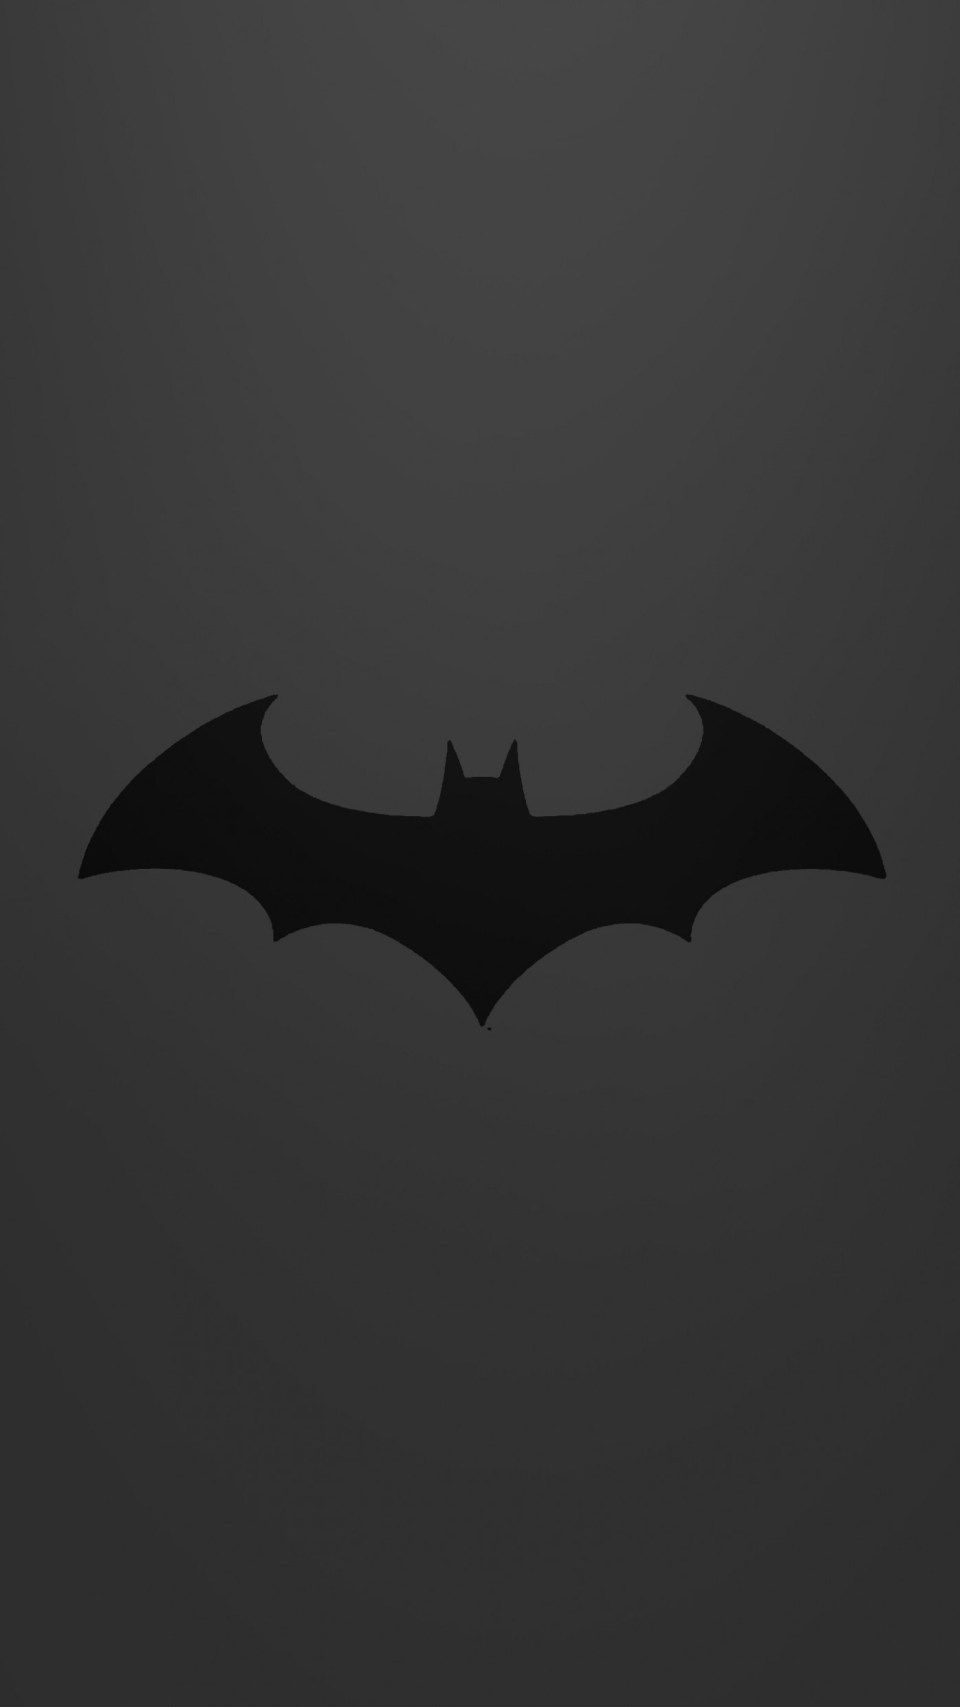 Batman Symbol iPhone Wallpaper posted .cutewallpaper.org